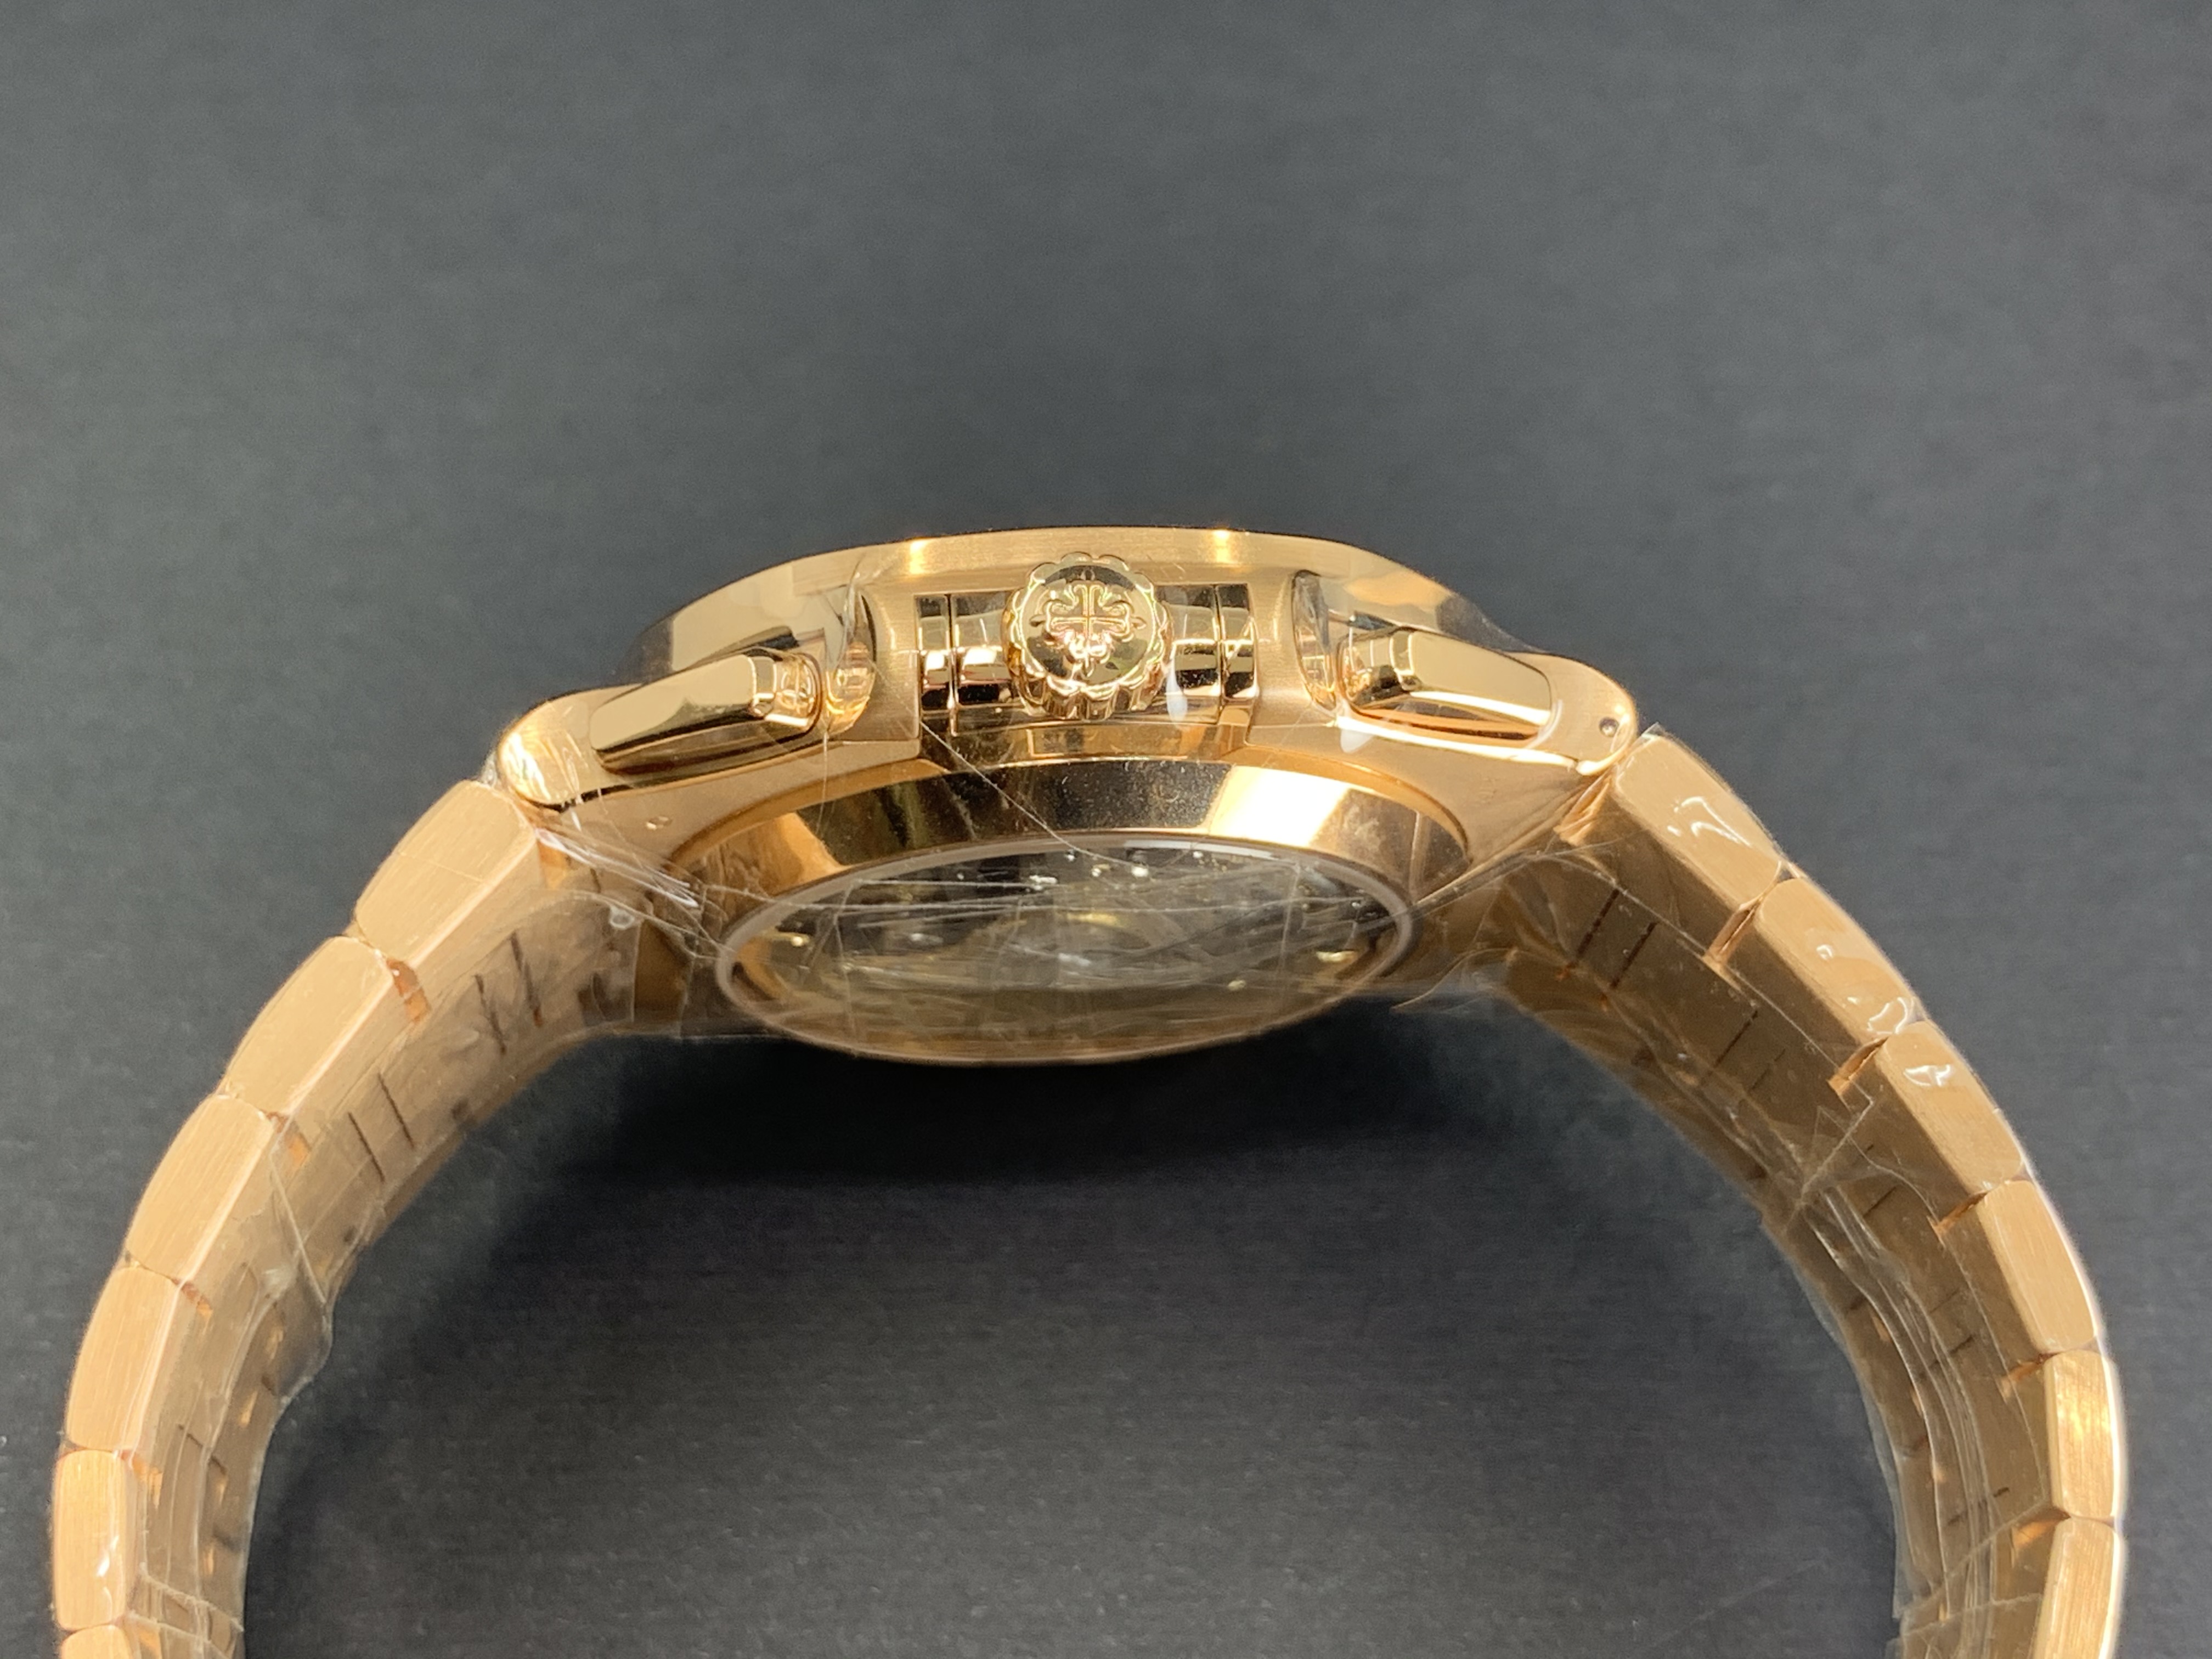 Patek Philippe Nautilus Chronograph Rose Gold Diamond Set - 5980/1400R ...